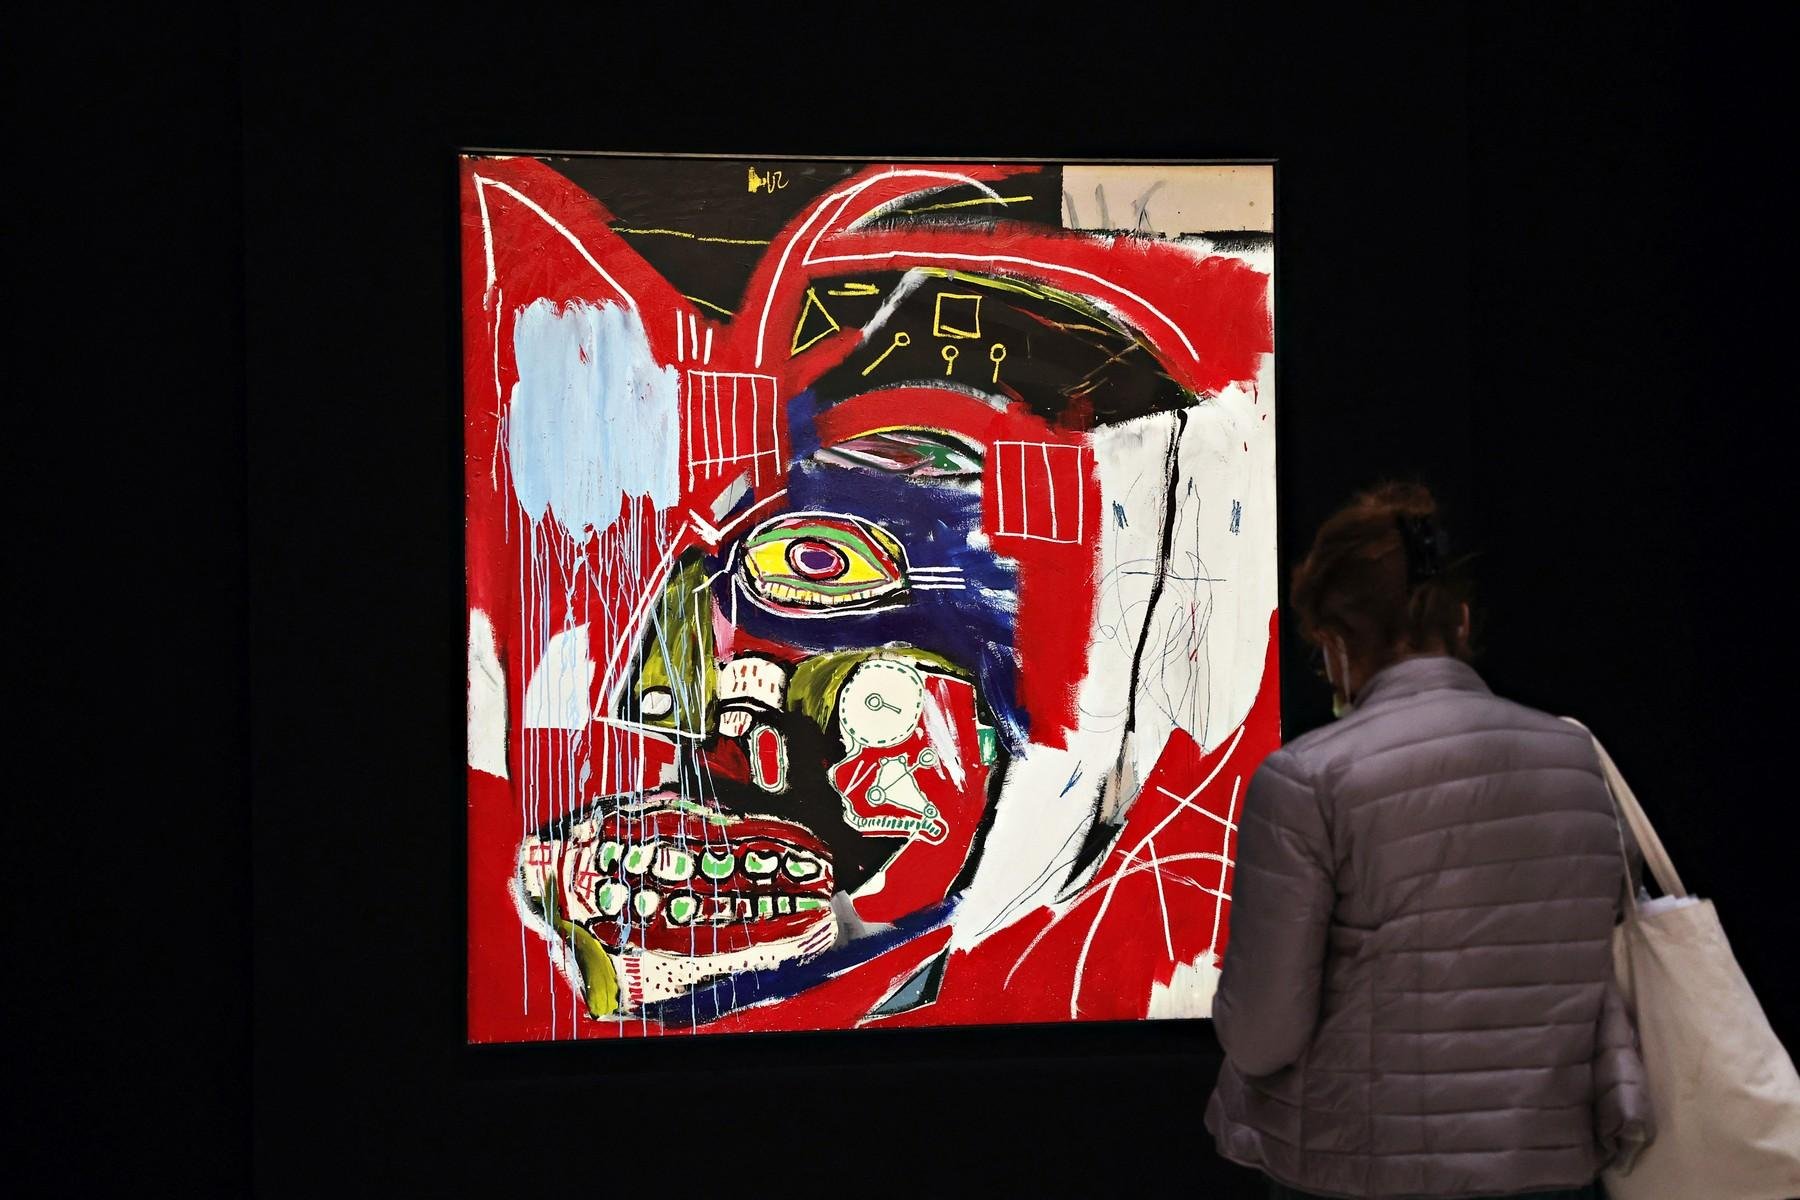  Un tablou de Basquiat, In This Case, a fost adjudecat la 93 de milioane de dolari